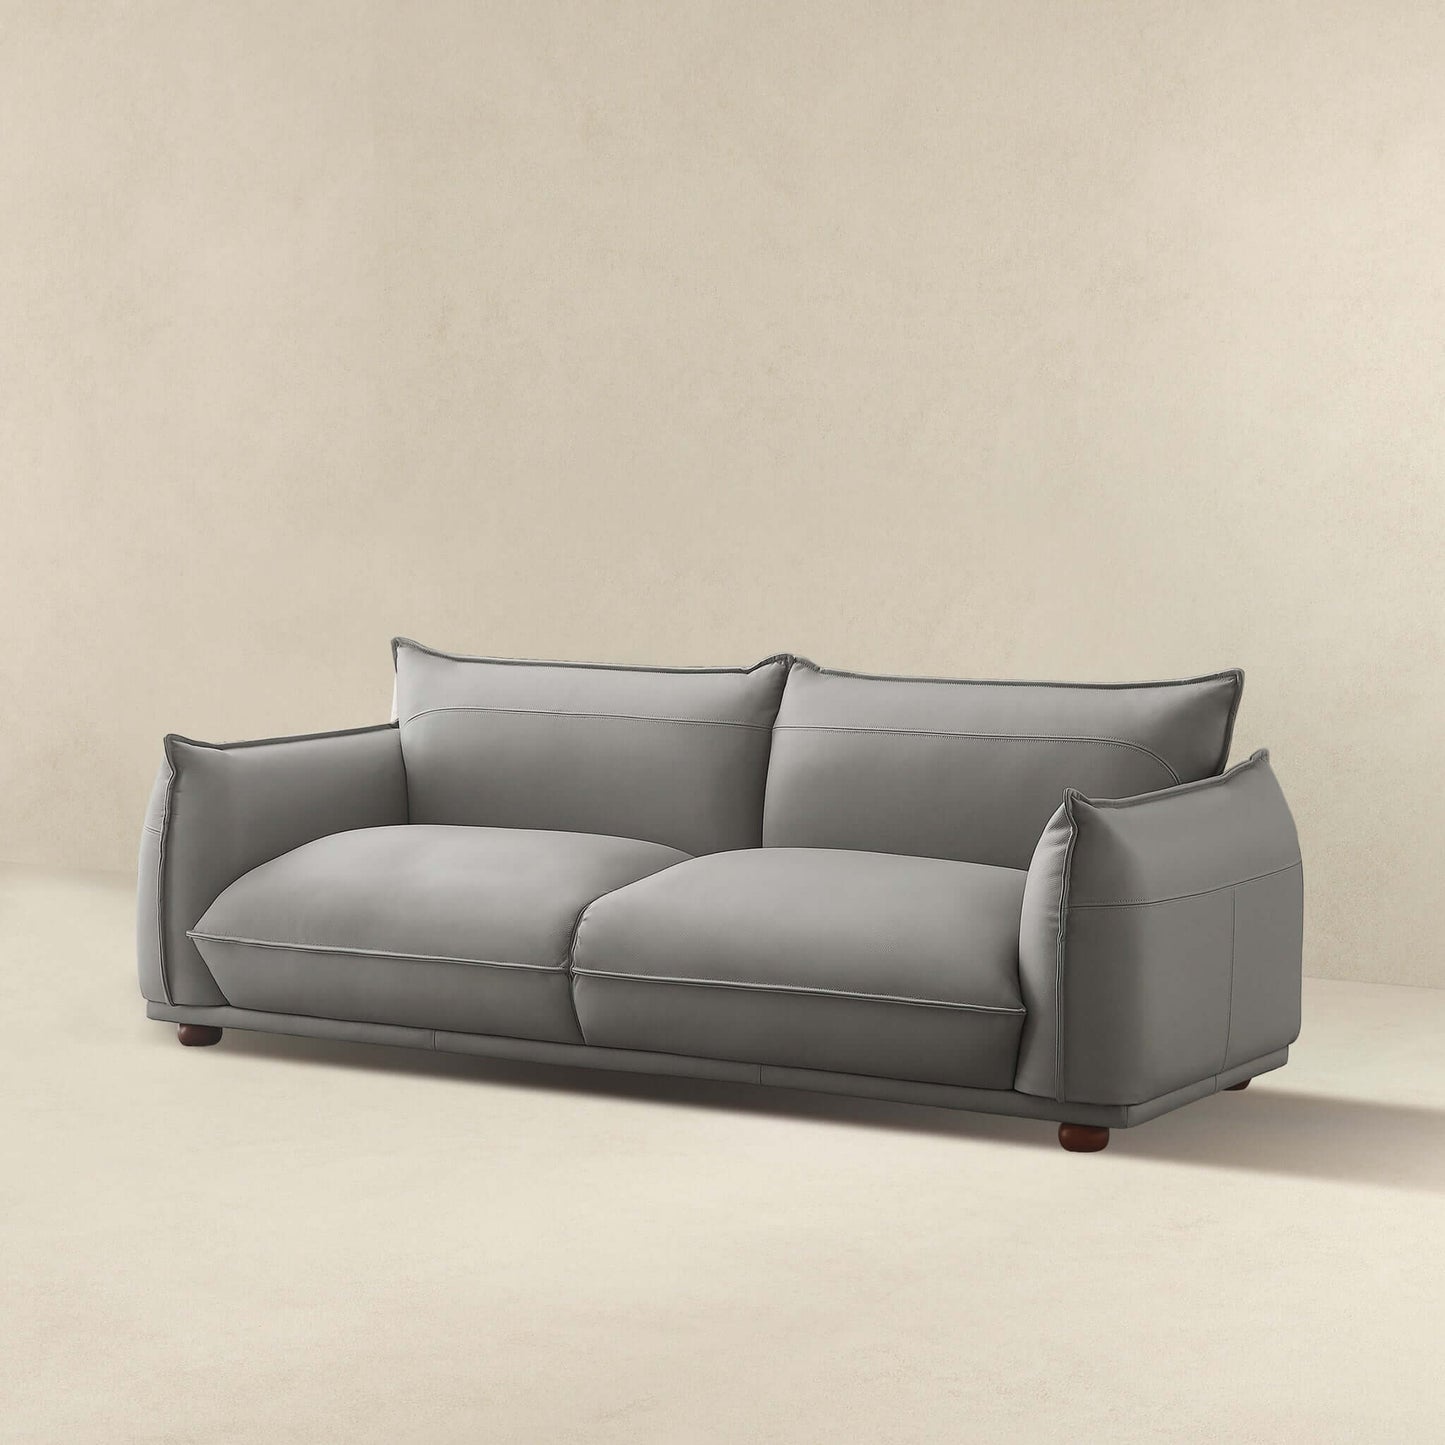 Ashcroft Furniture Co Sofas Emma Mid Century Modern Luxury Grey Leather Sofa